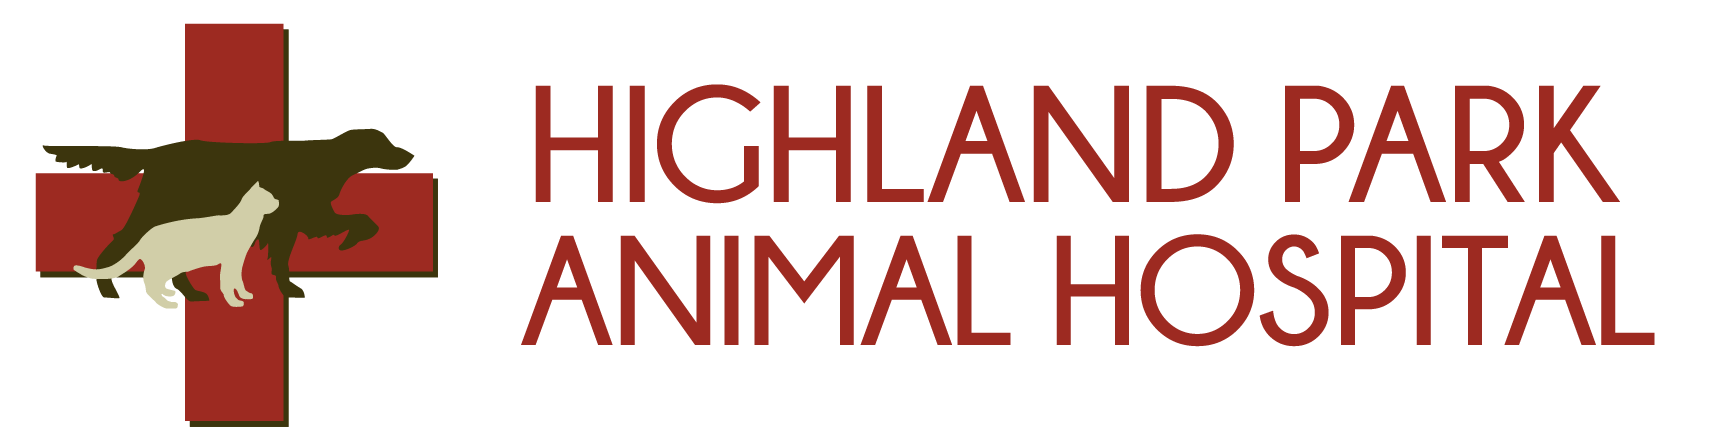 Highland Park Animal Hospital: Top Rated Dallas Veterinarians